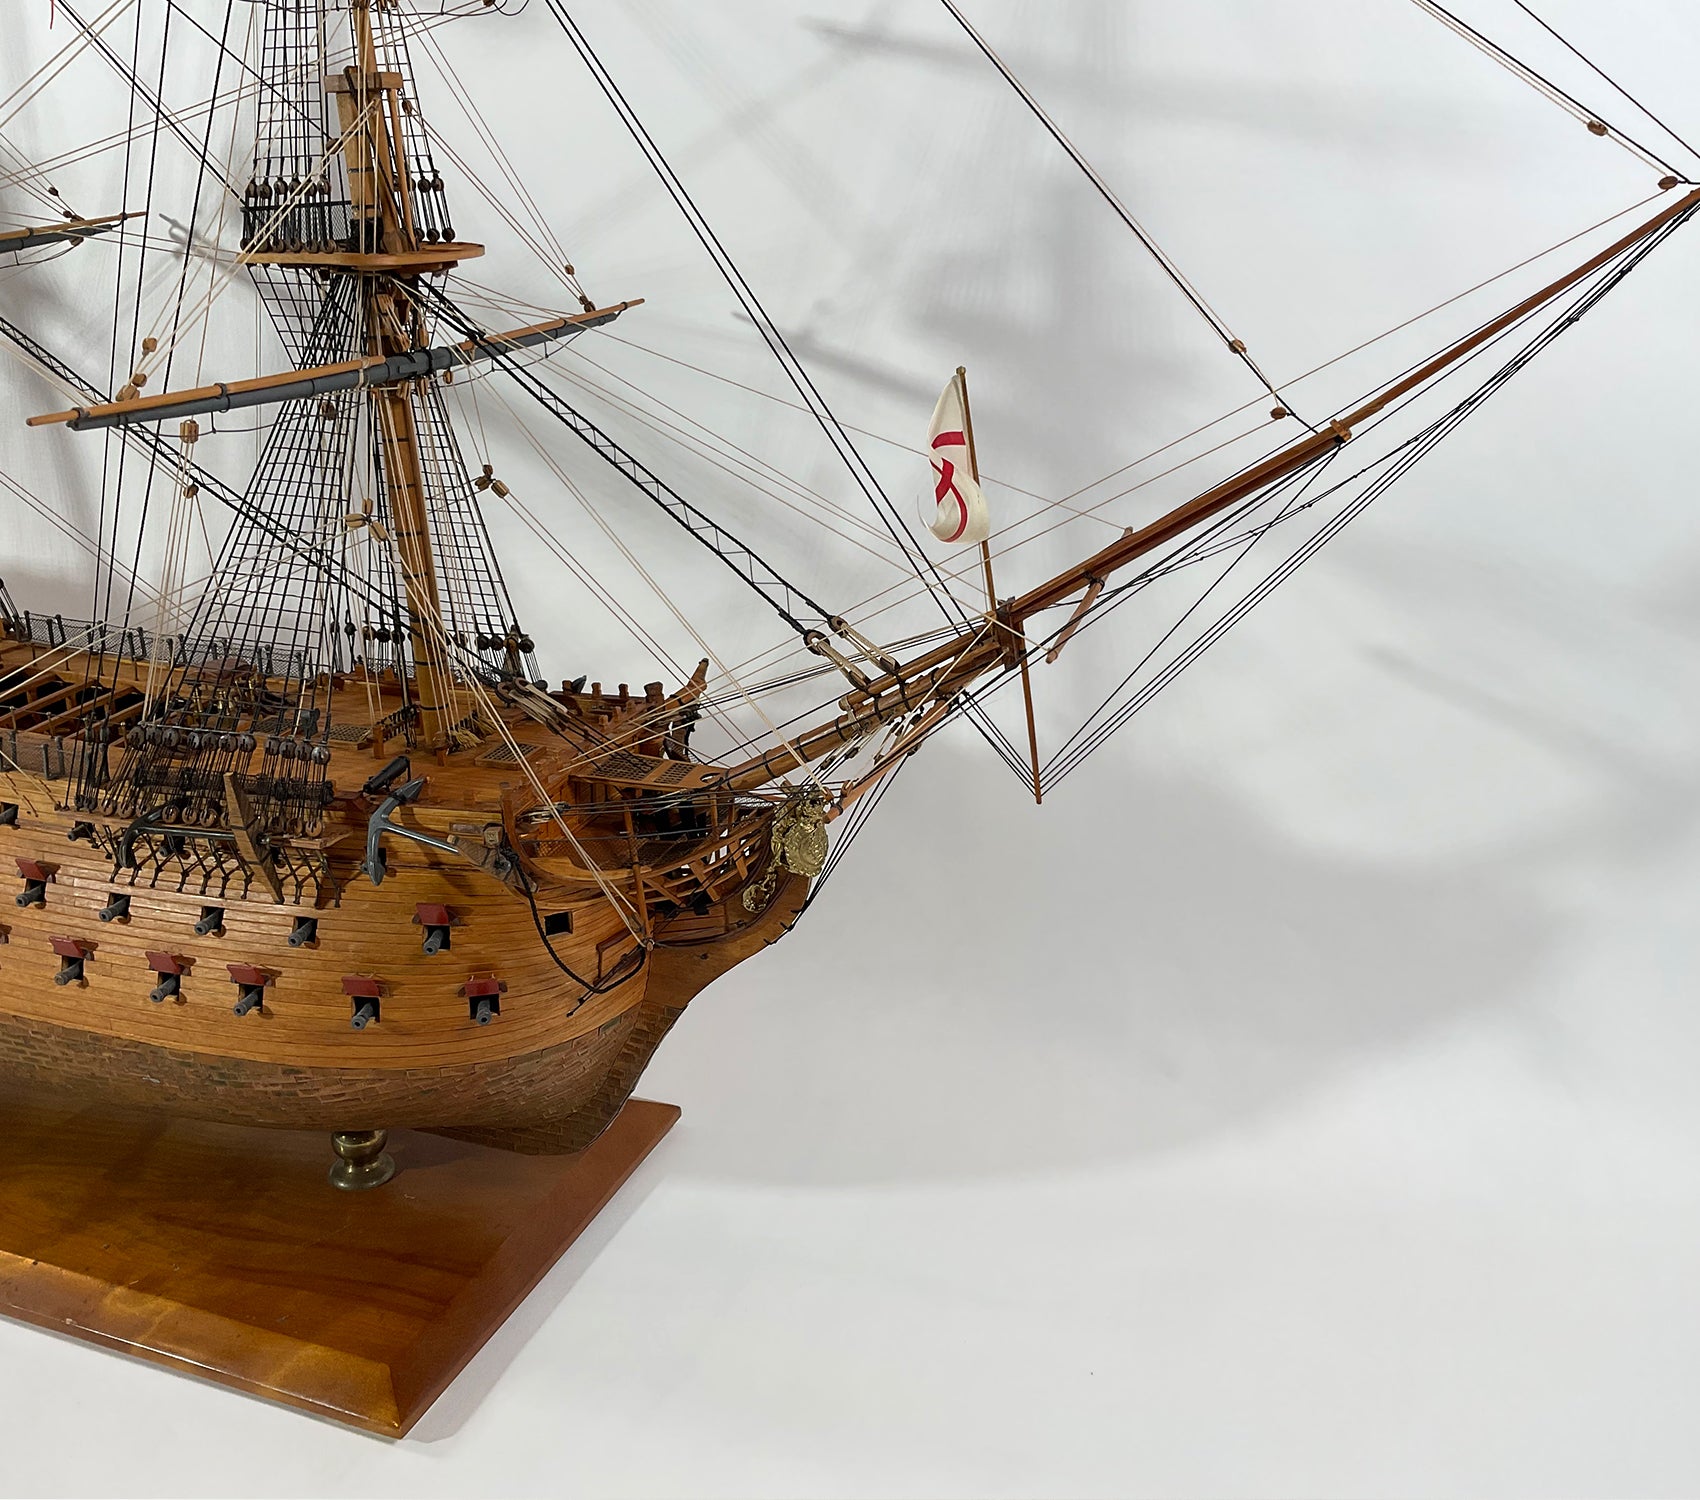 Model Of The British Royal Navy Frigate HMS Victory - Lannan Gallery